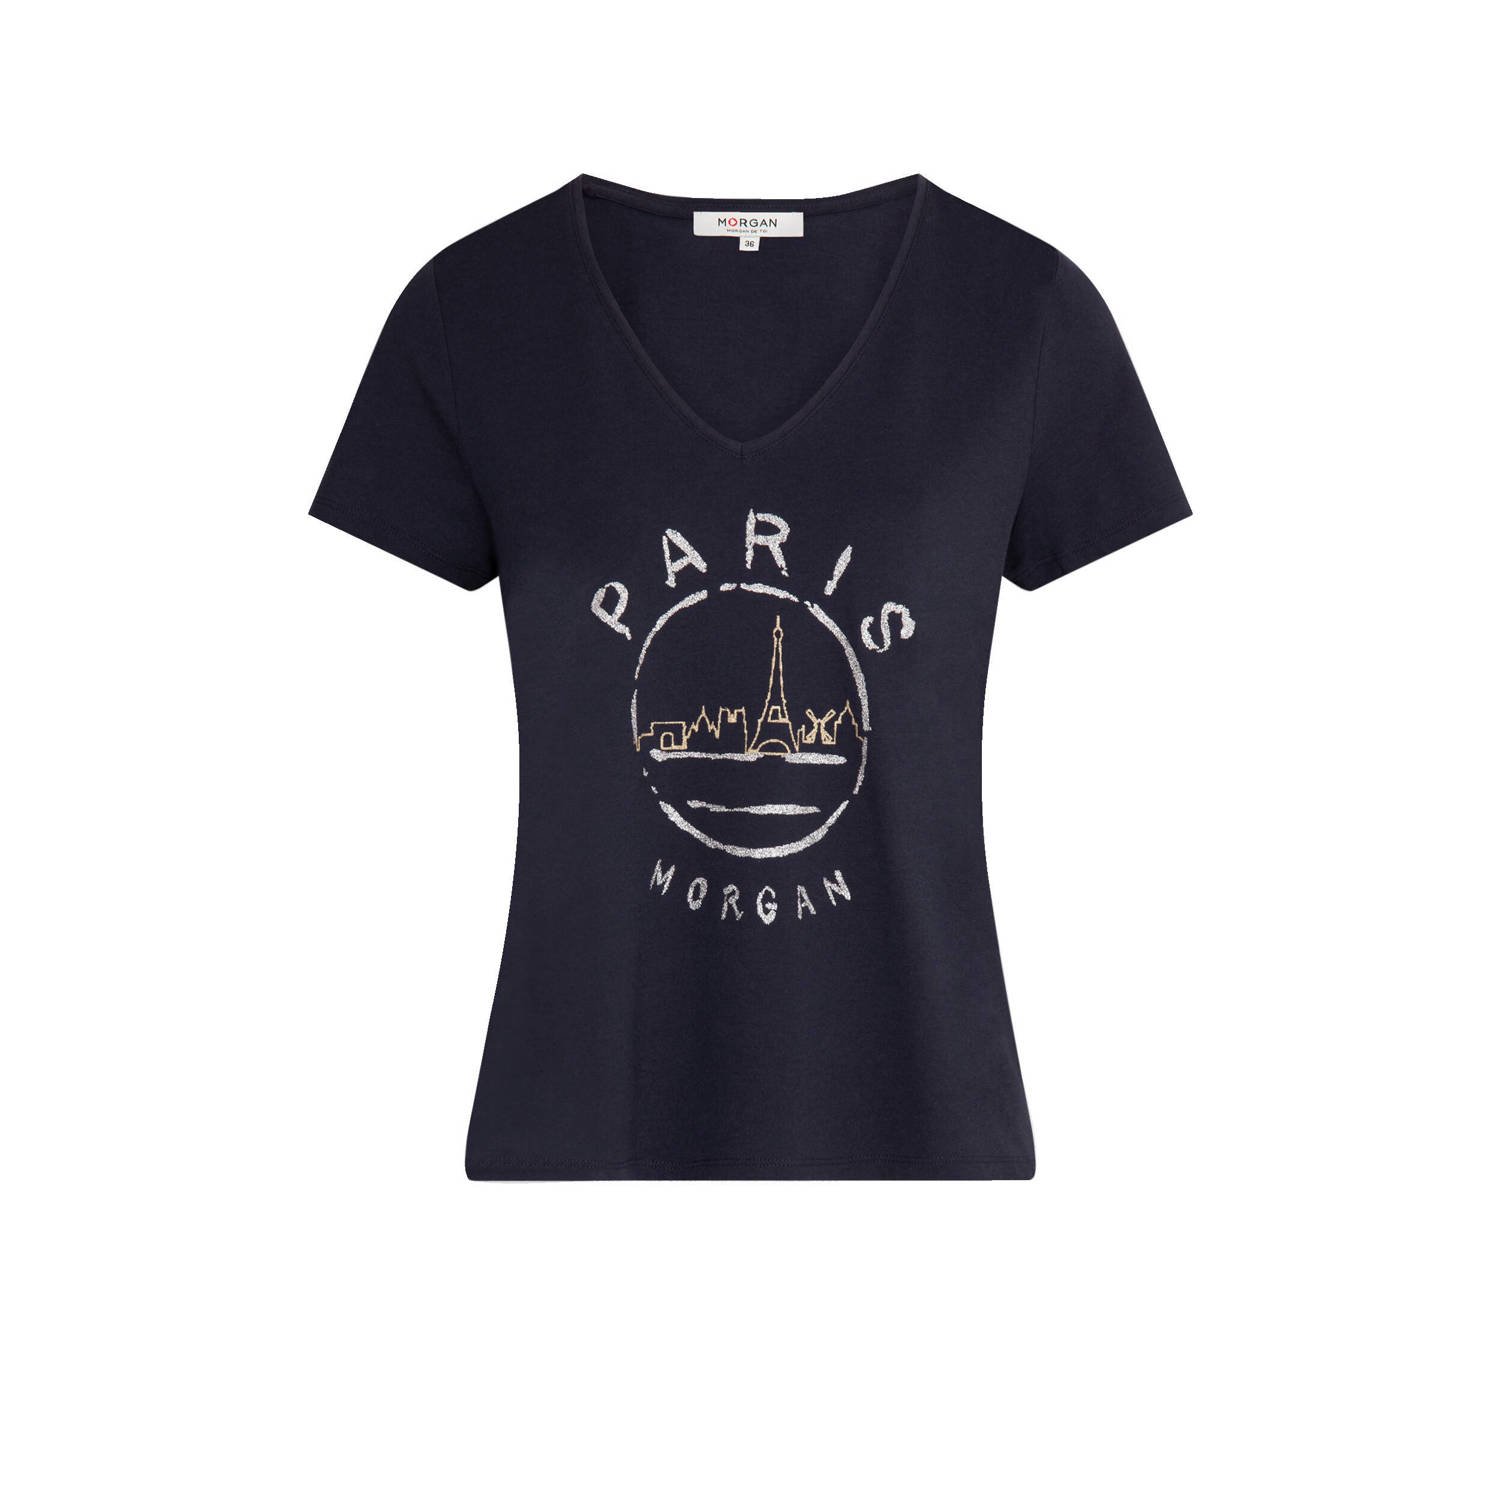 Morgan T-shirt met printopdruk en glitters marine